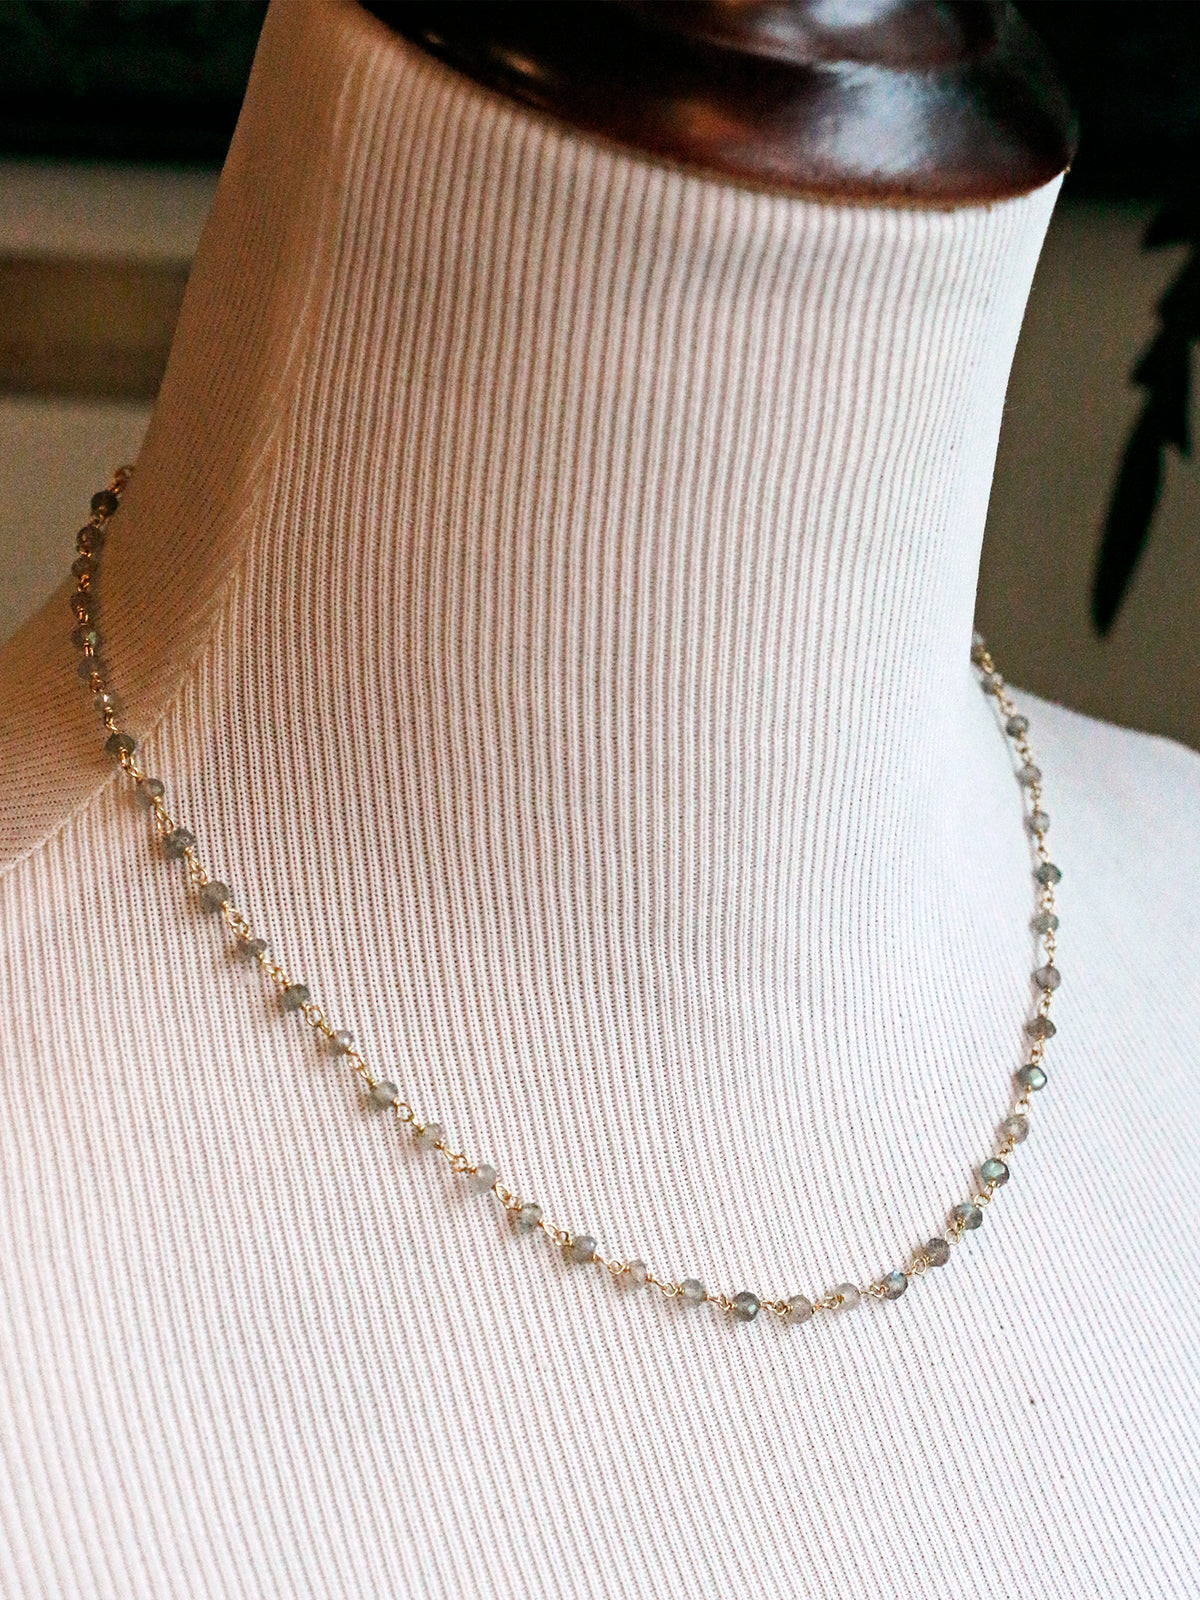 Susan Rifkin Beaded Labradorite Necklace